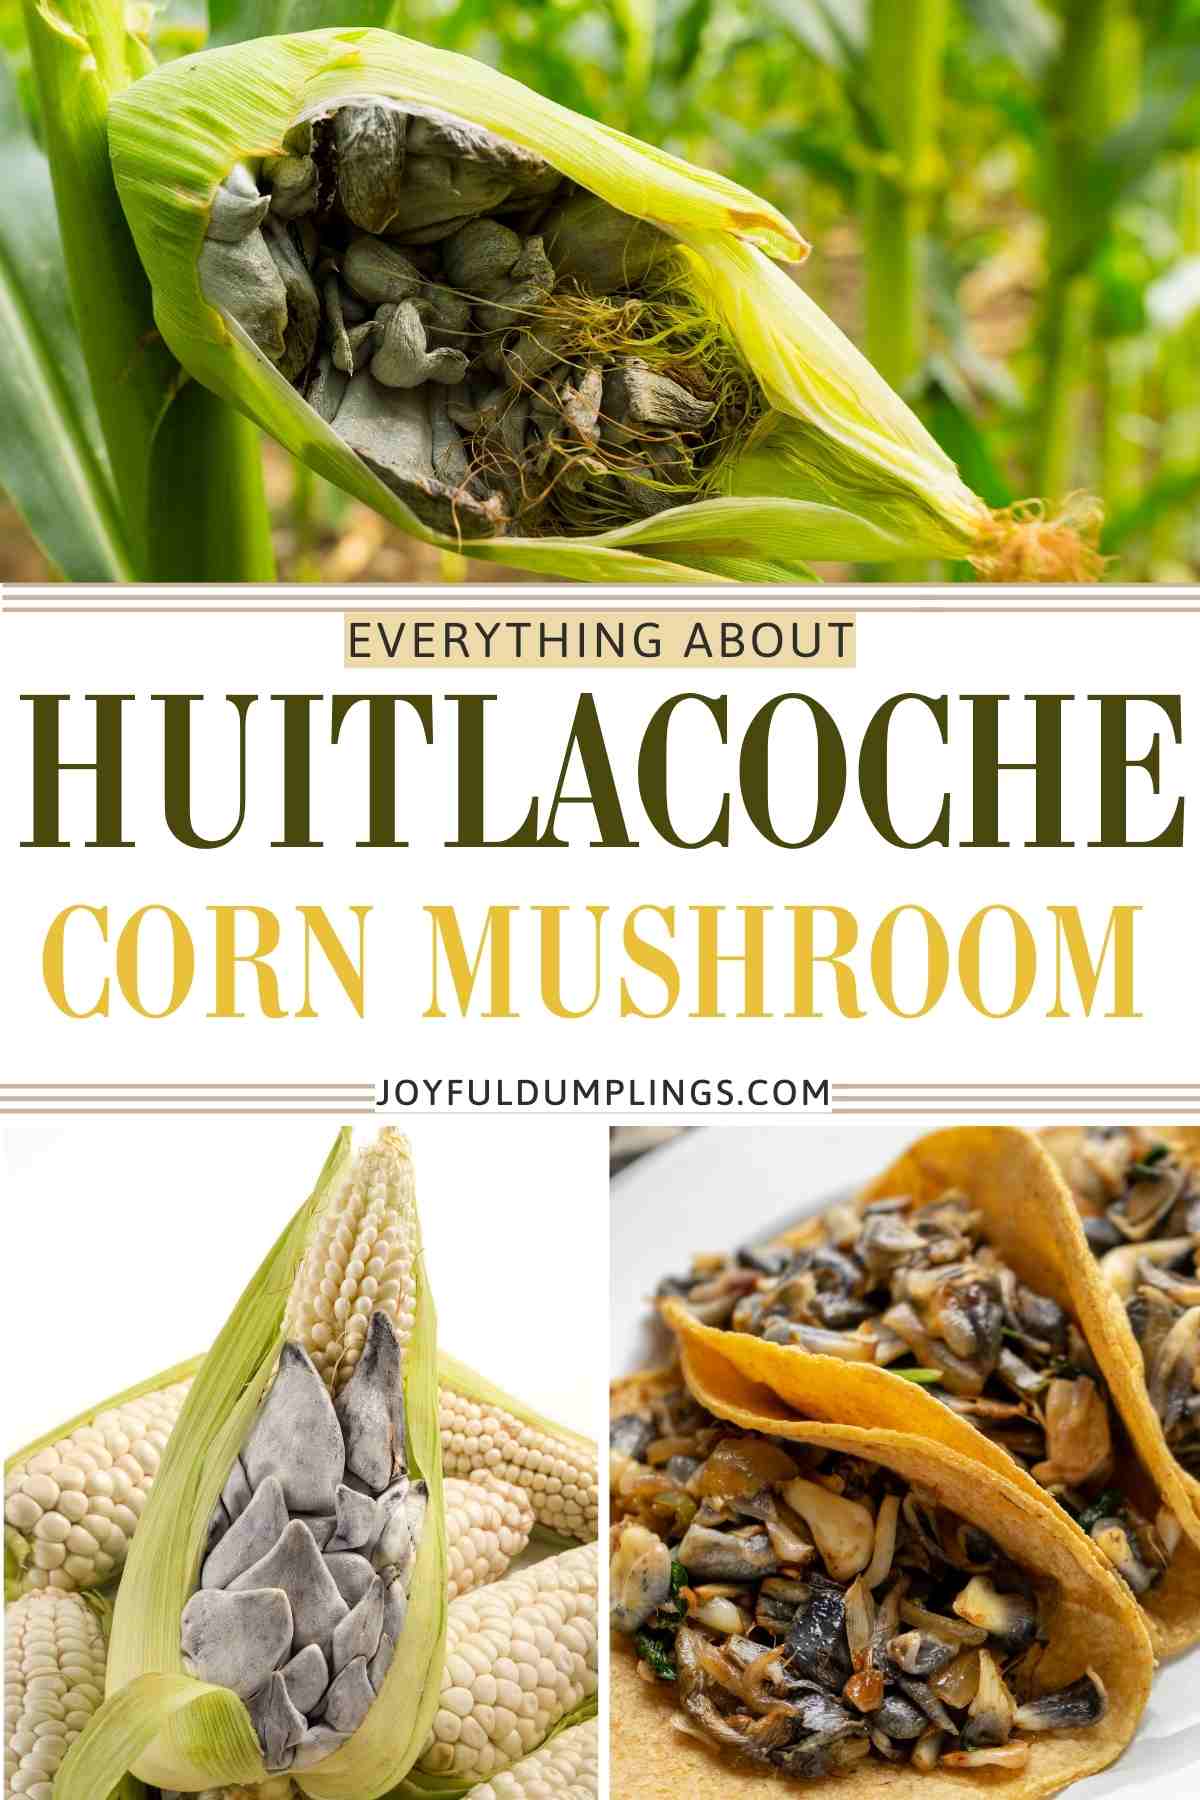 Huitlacoche (Corn Smut) – A Prized Mushroom Delicacy!